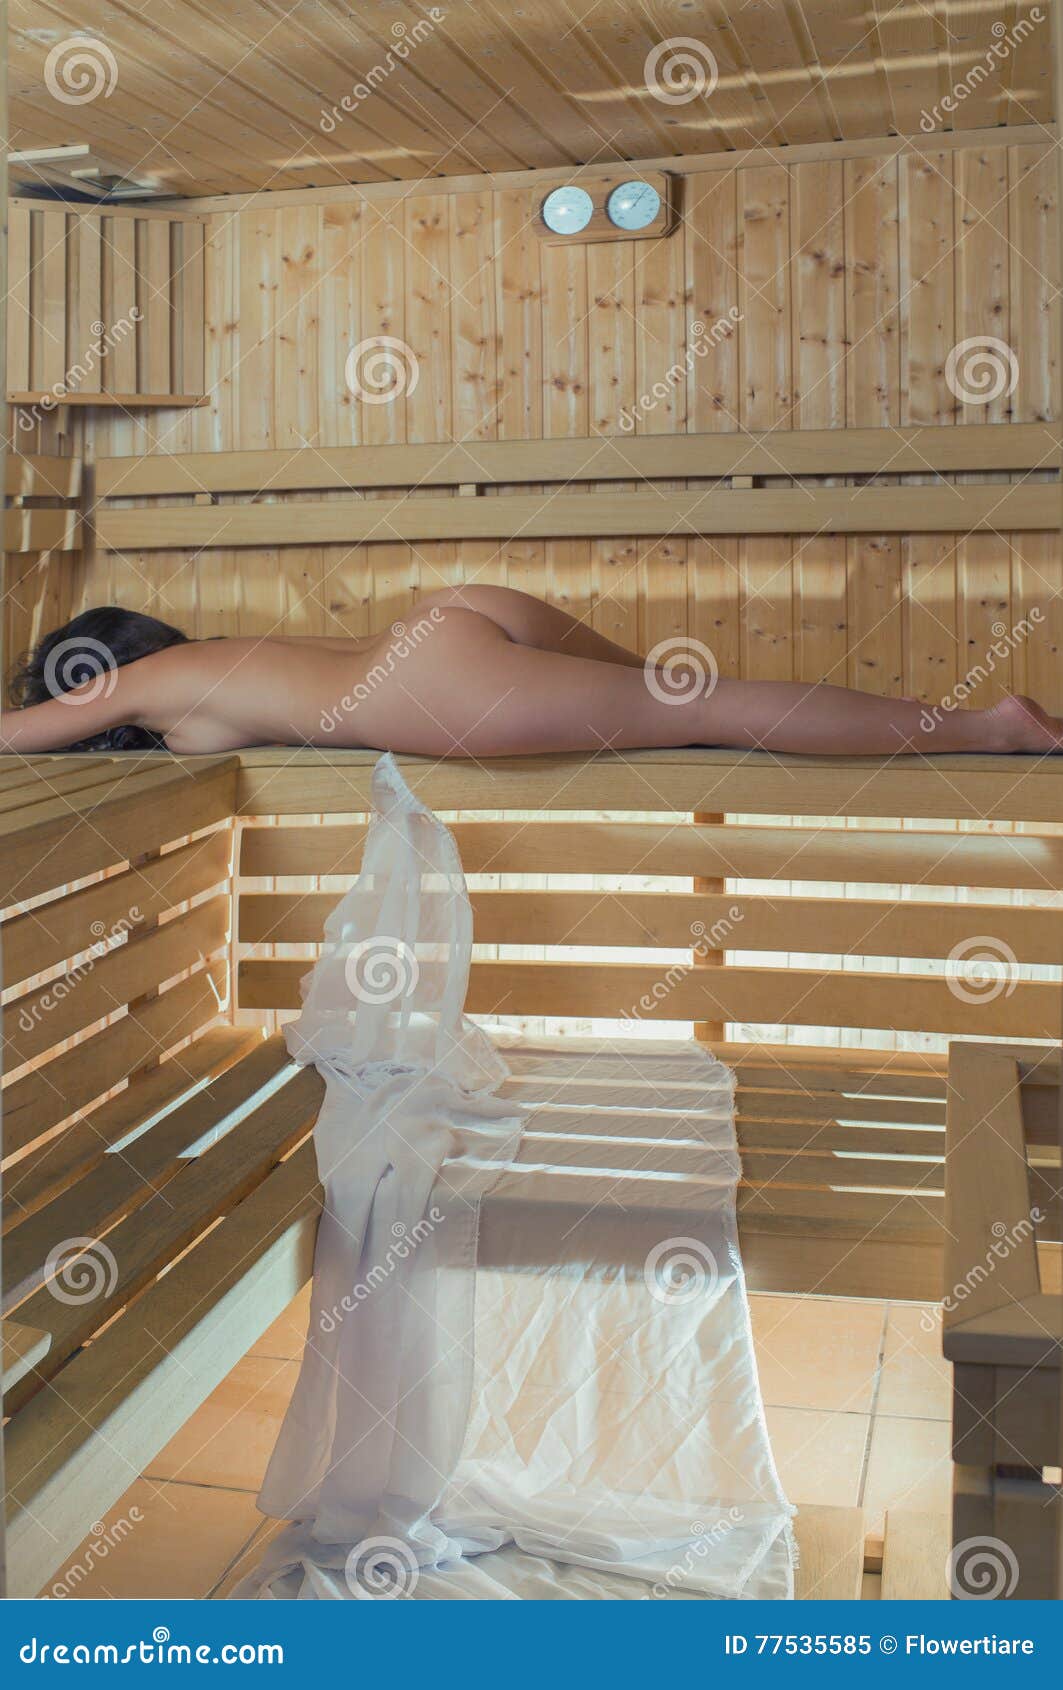 abby green add wife nude in sauna photo